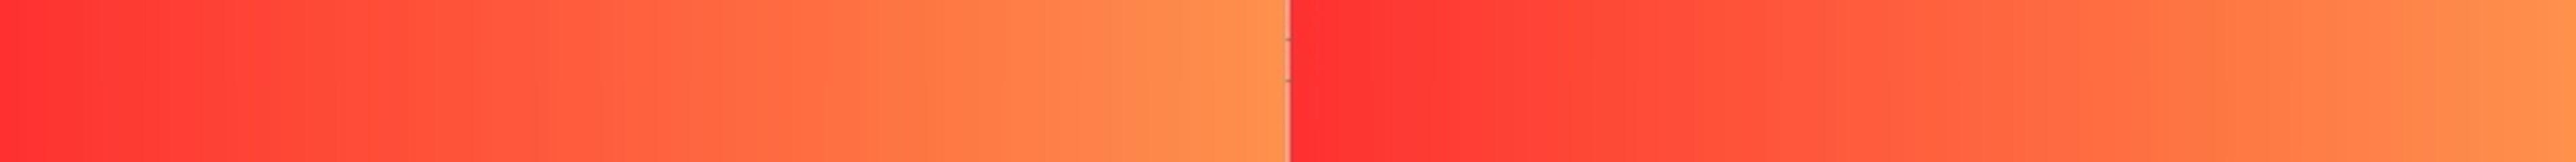 A long horizontal orange gradient stripe in two parts